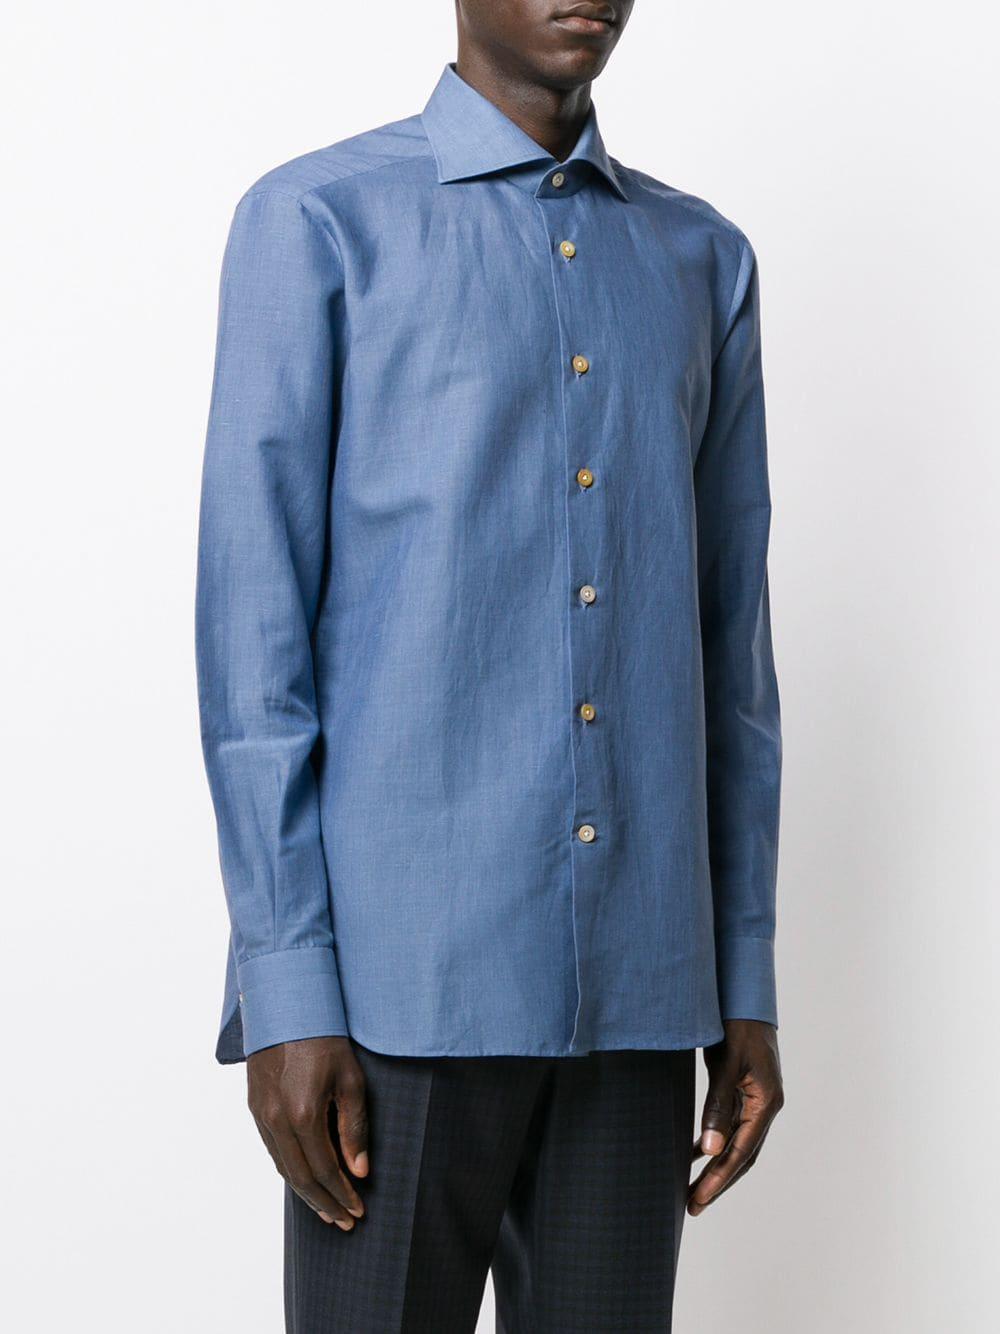 Kiton Plain Button Shirt in Blue for Men - Lyst